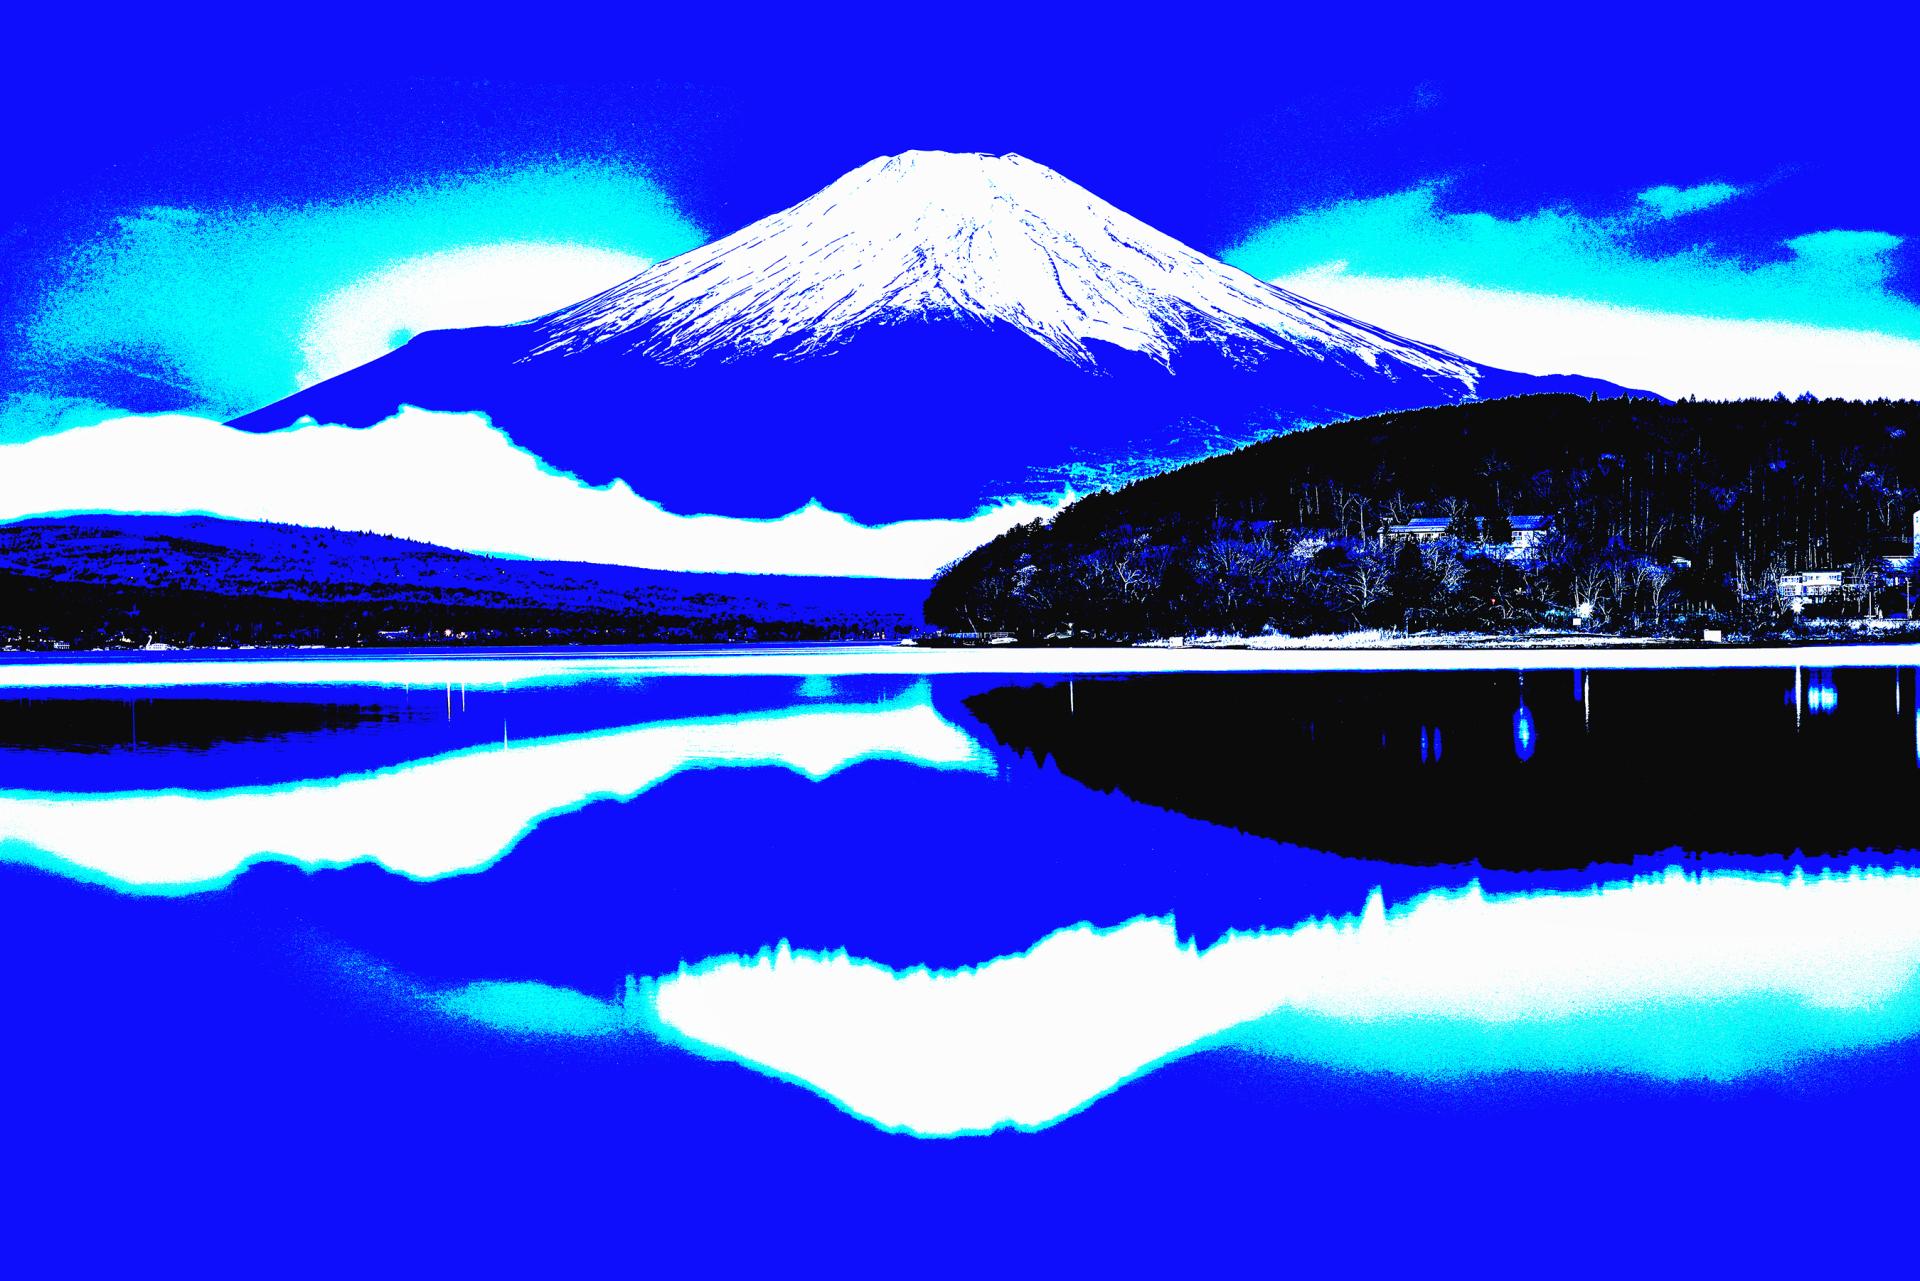 London Photography Awards Winner - Print of Mount Fuji